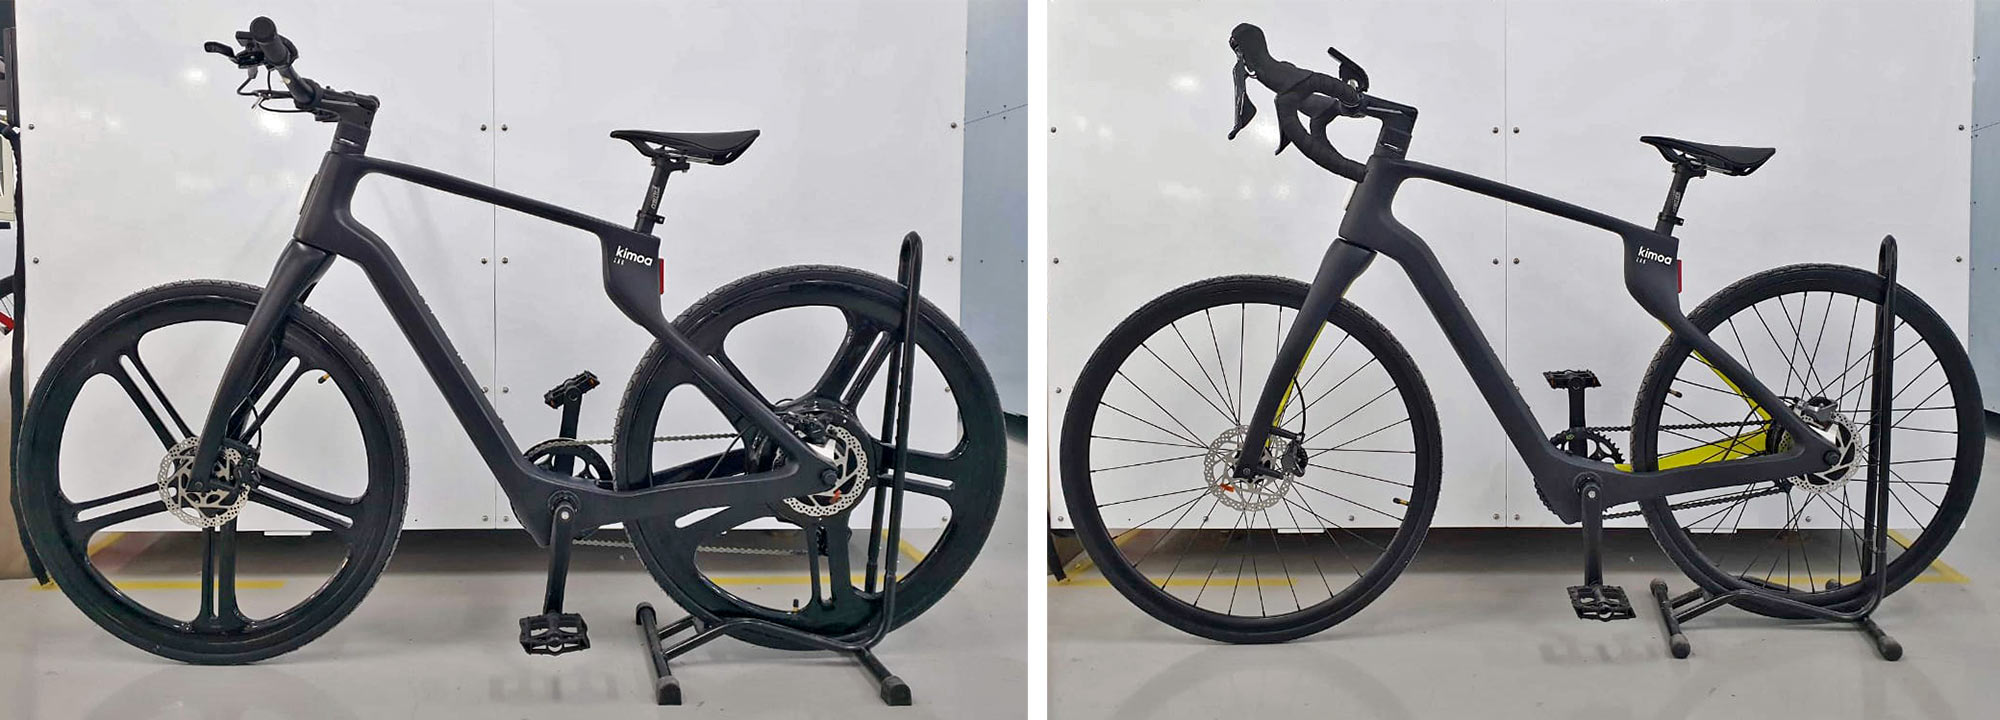 Kimoa x Arevo custom 3d-printed carbon e-bike, black build options